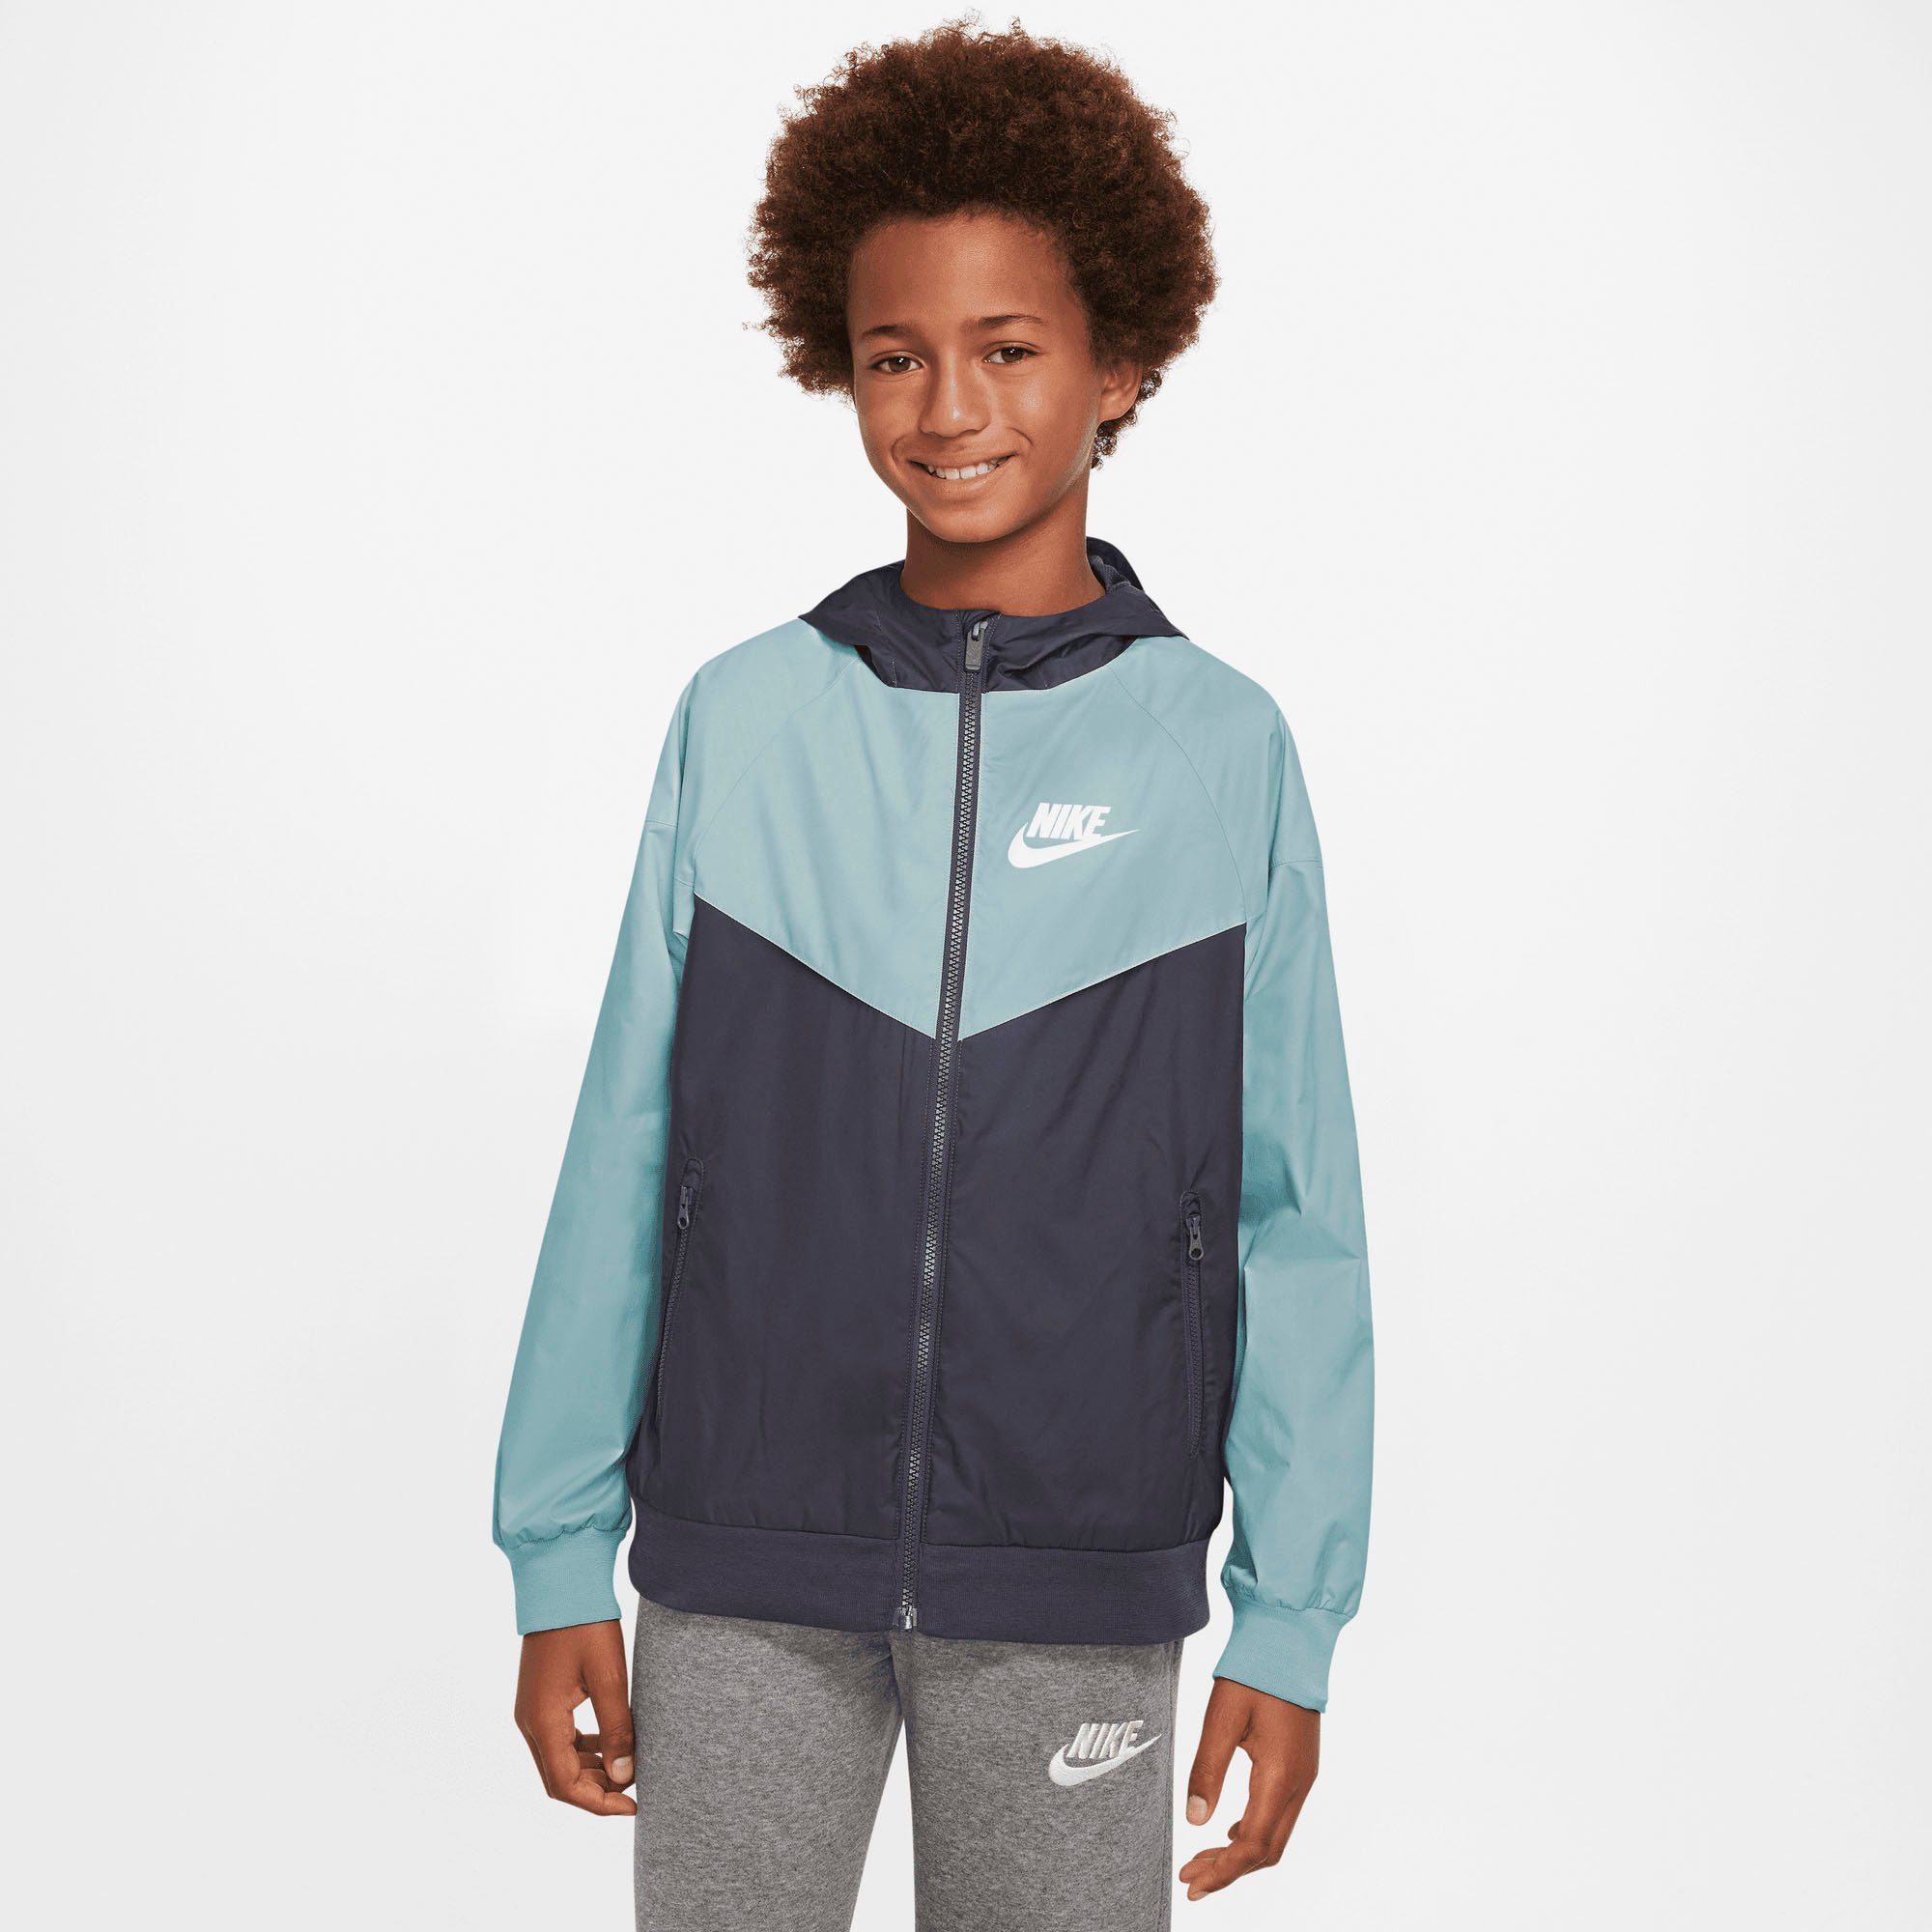 100% Qualität Nike Sportswear Big Windrunner (Boys) Jacket Sweatjacke Kids' grau